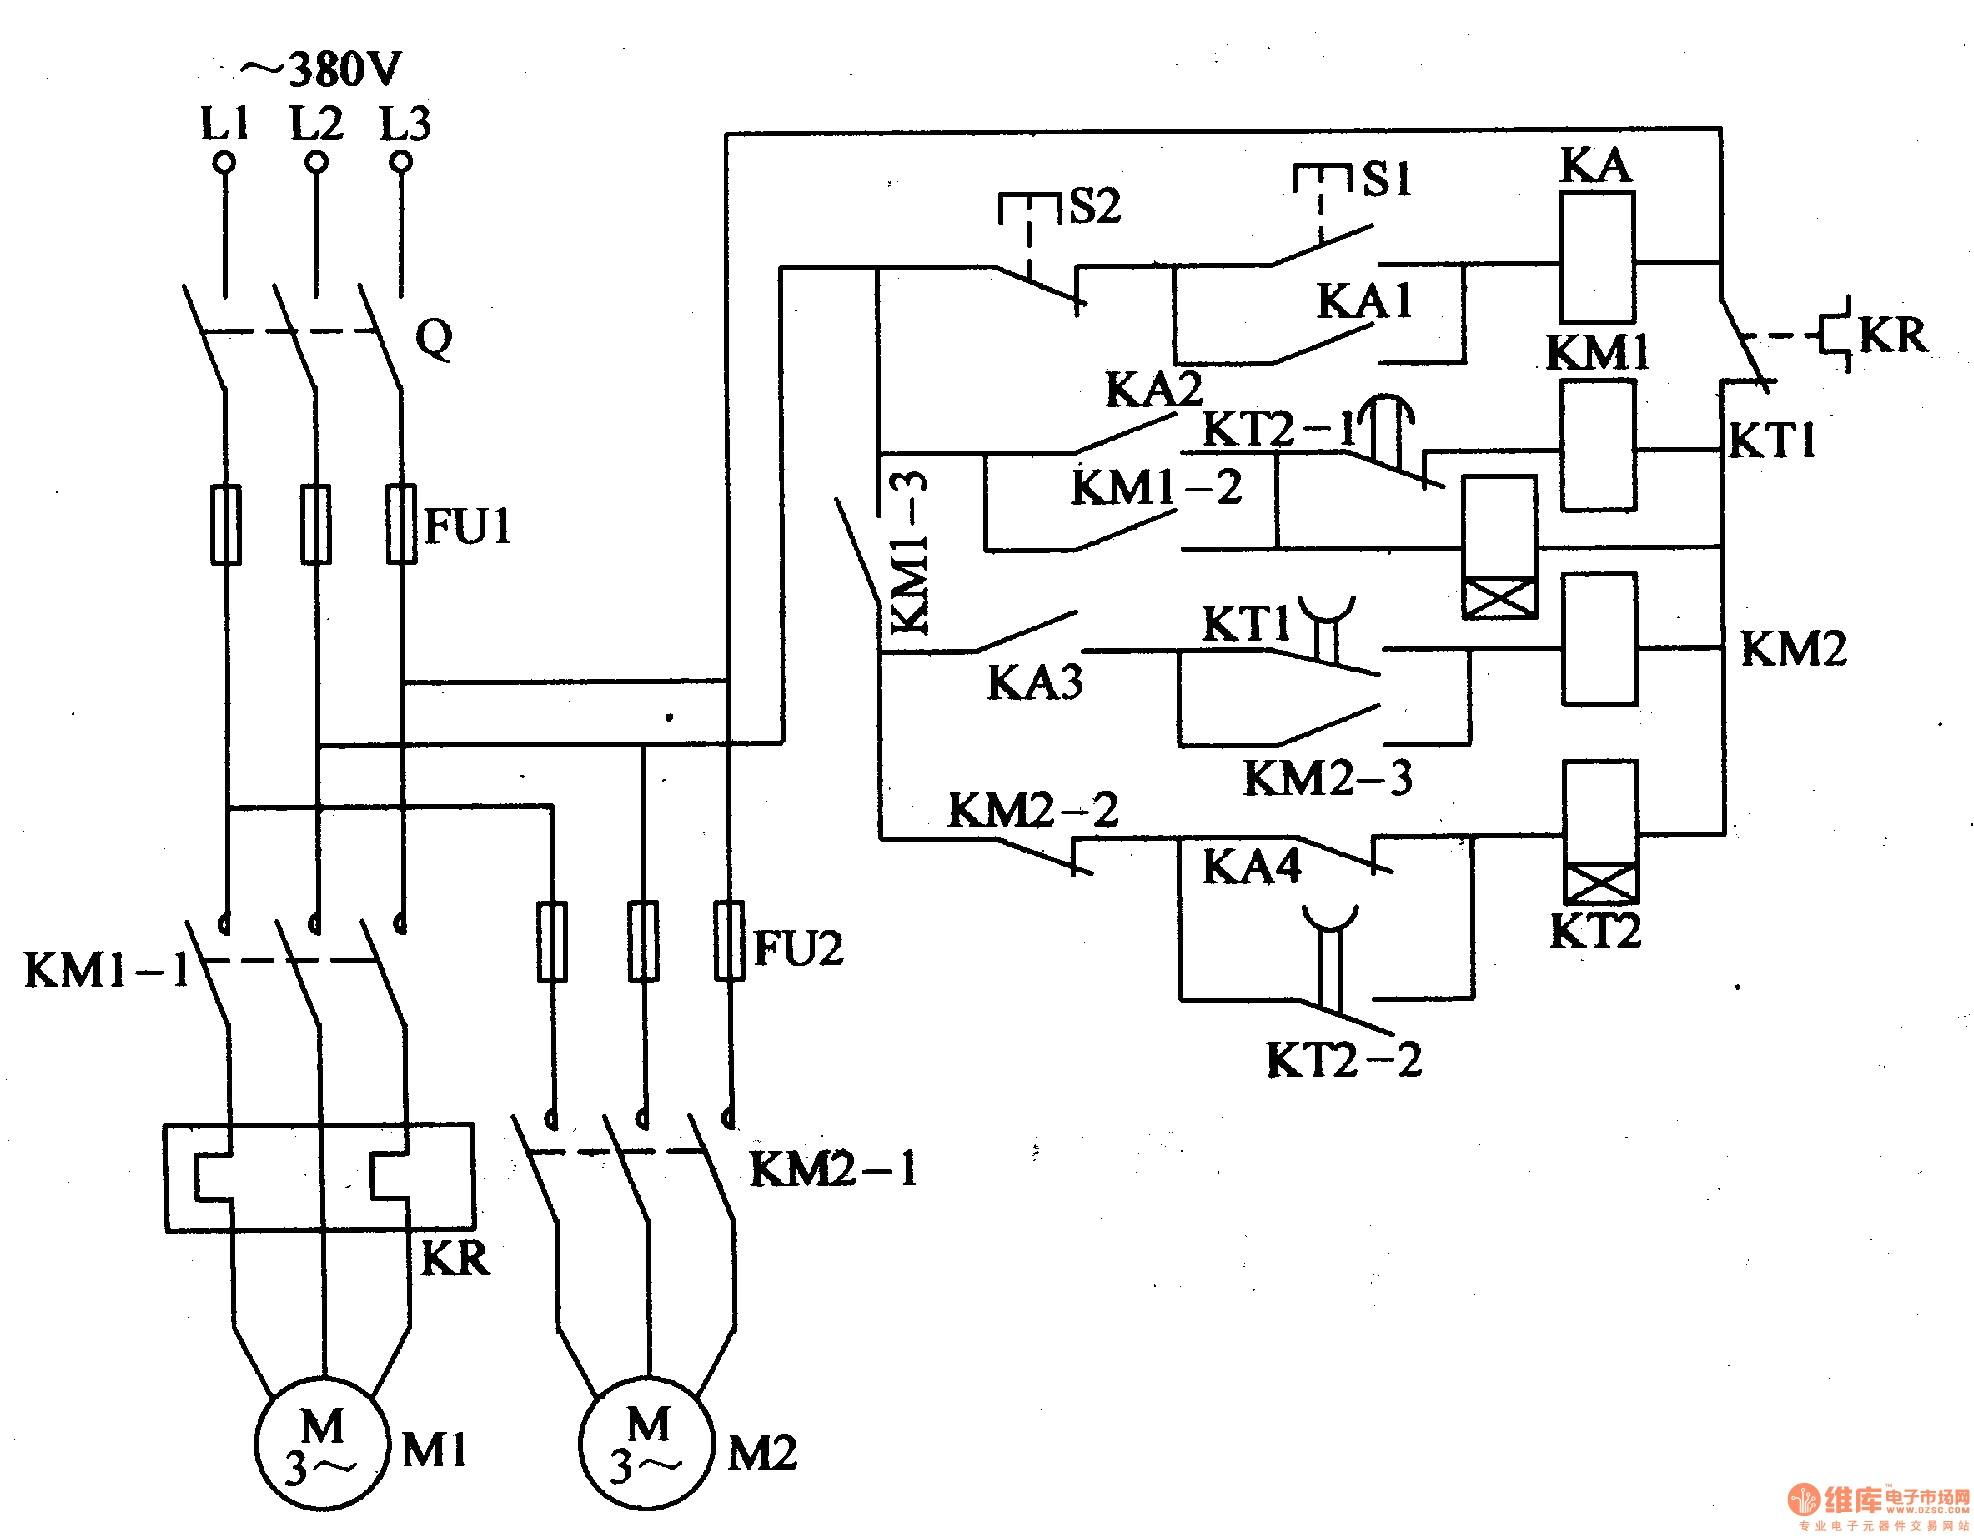 electrical control wiring books wiring diagram img e bike controller wiring diagram pdf control wiring books